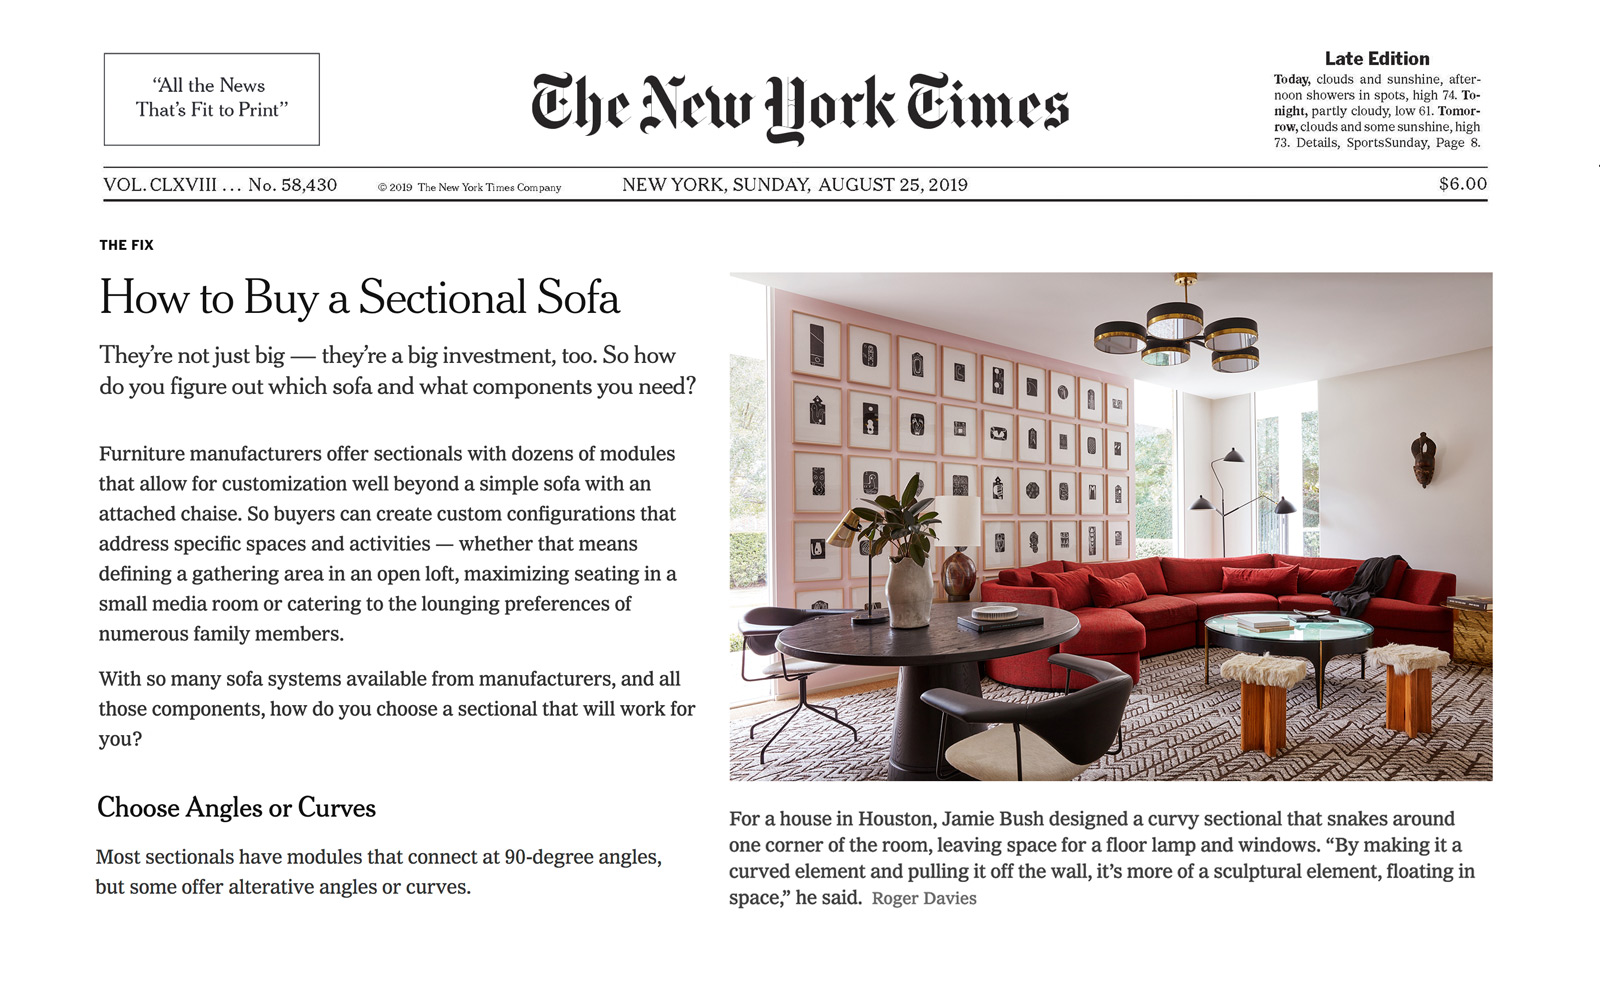 NYTImes-article-choosing-a-sectional-sofa-p1.jpg